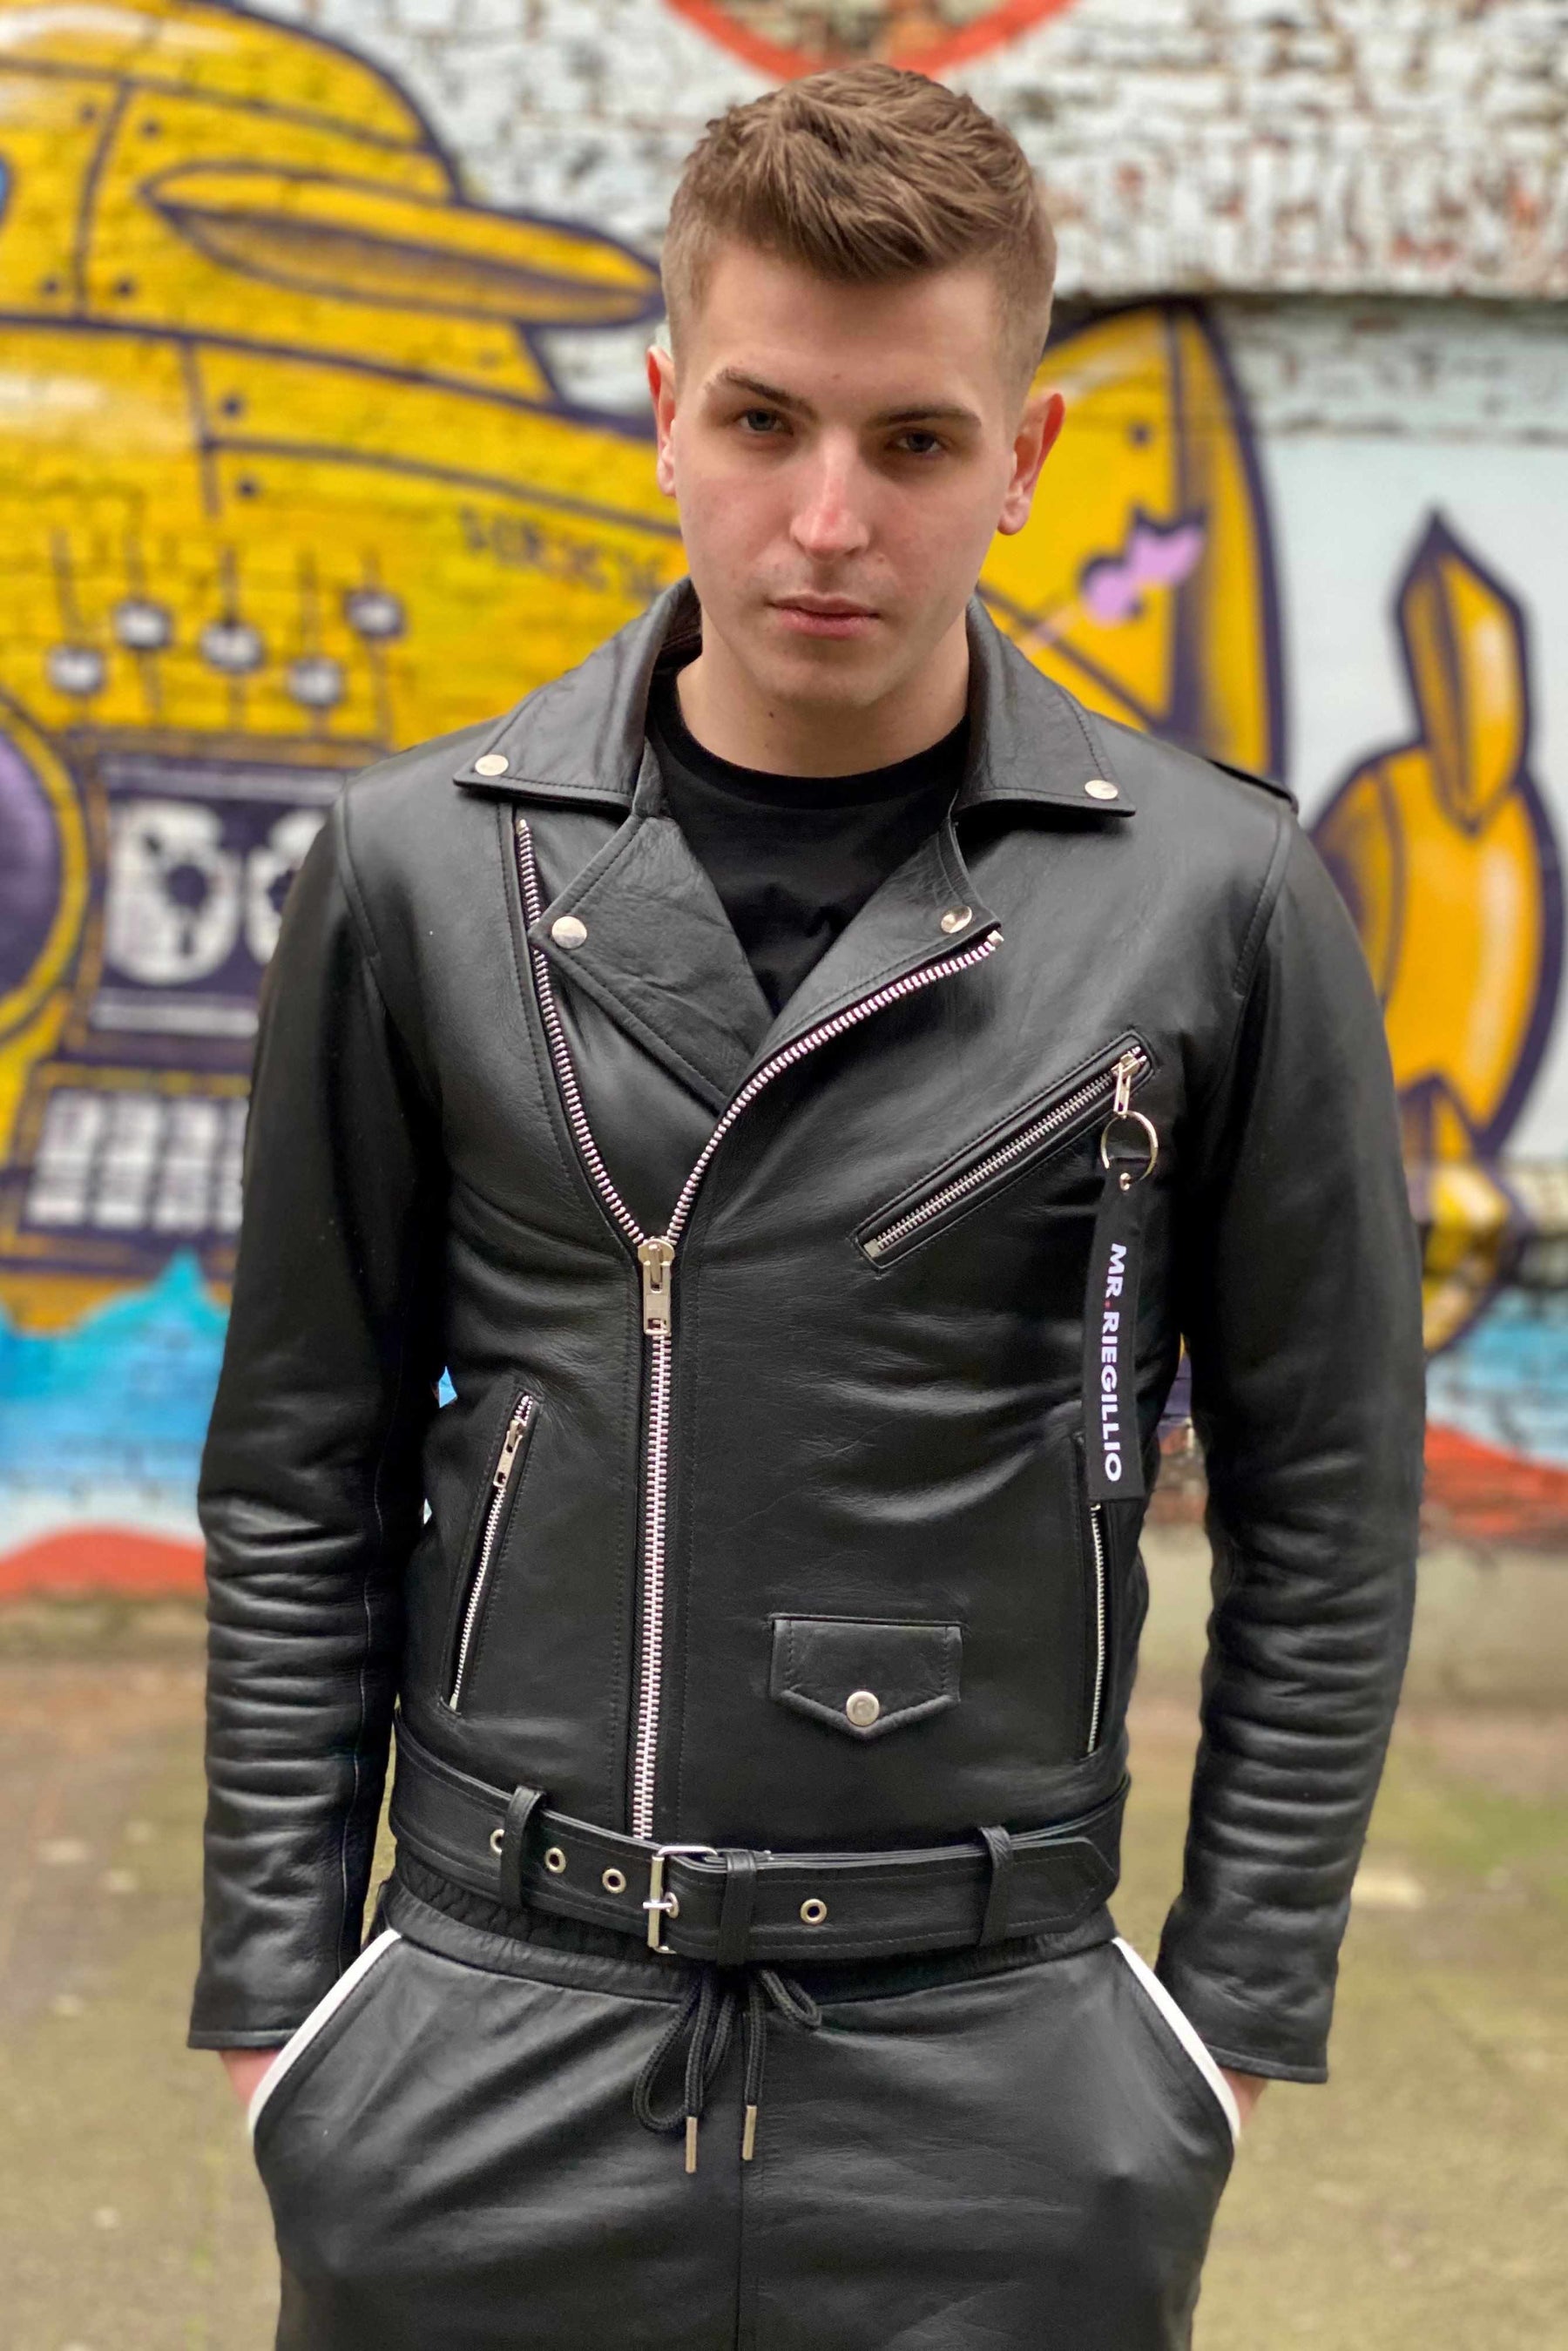 Shop gay leather jackets in the best designs | MR. Riegillio